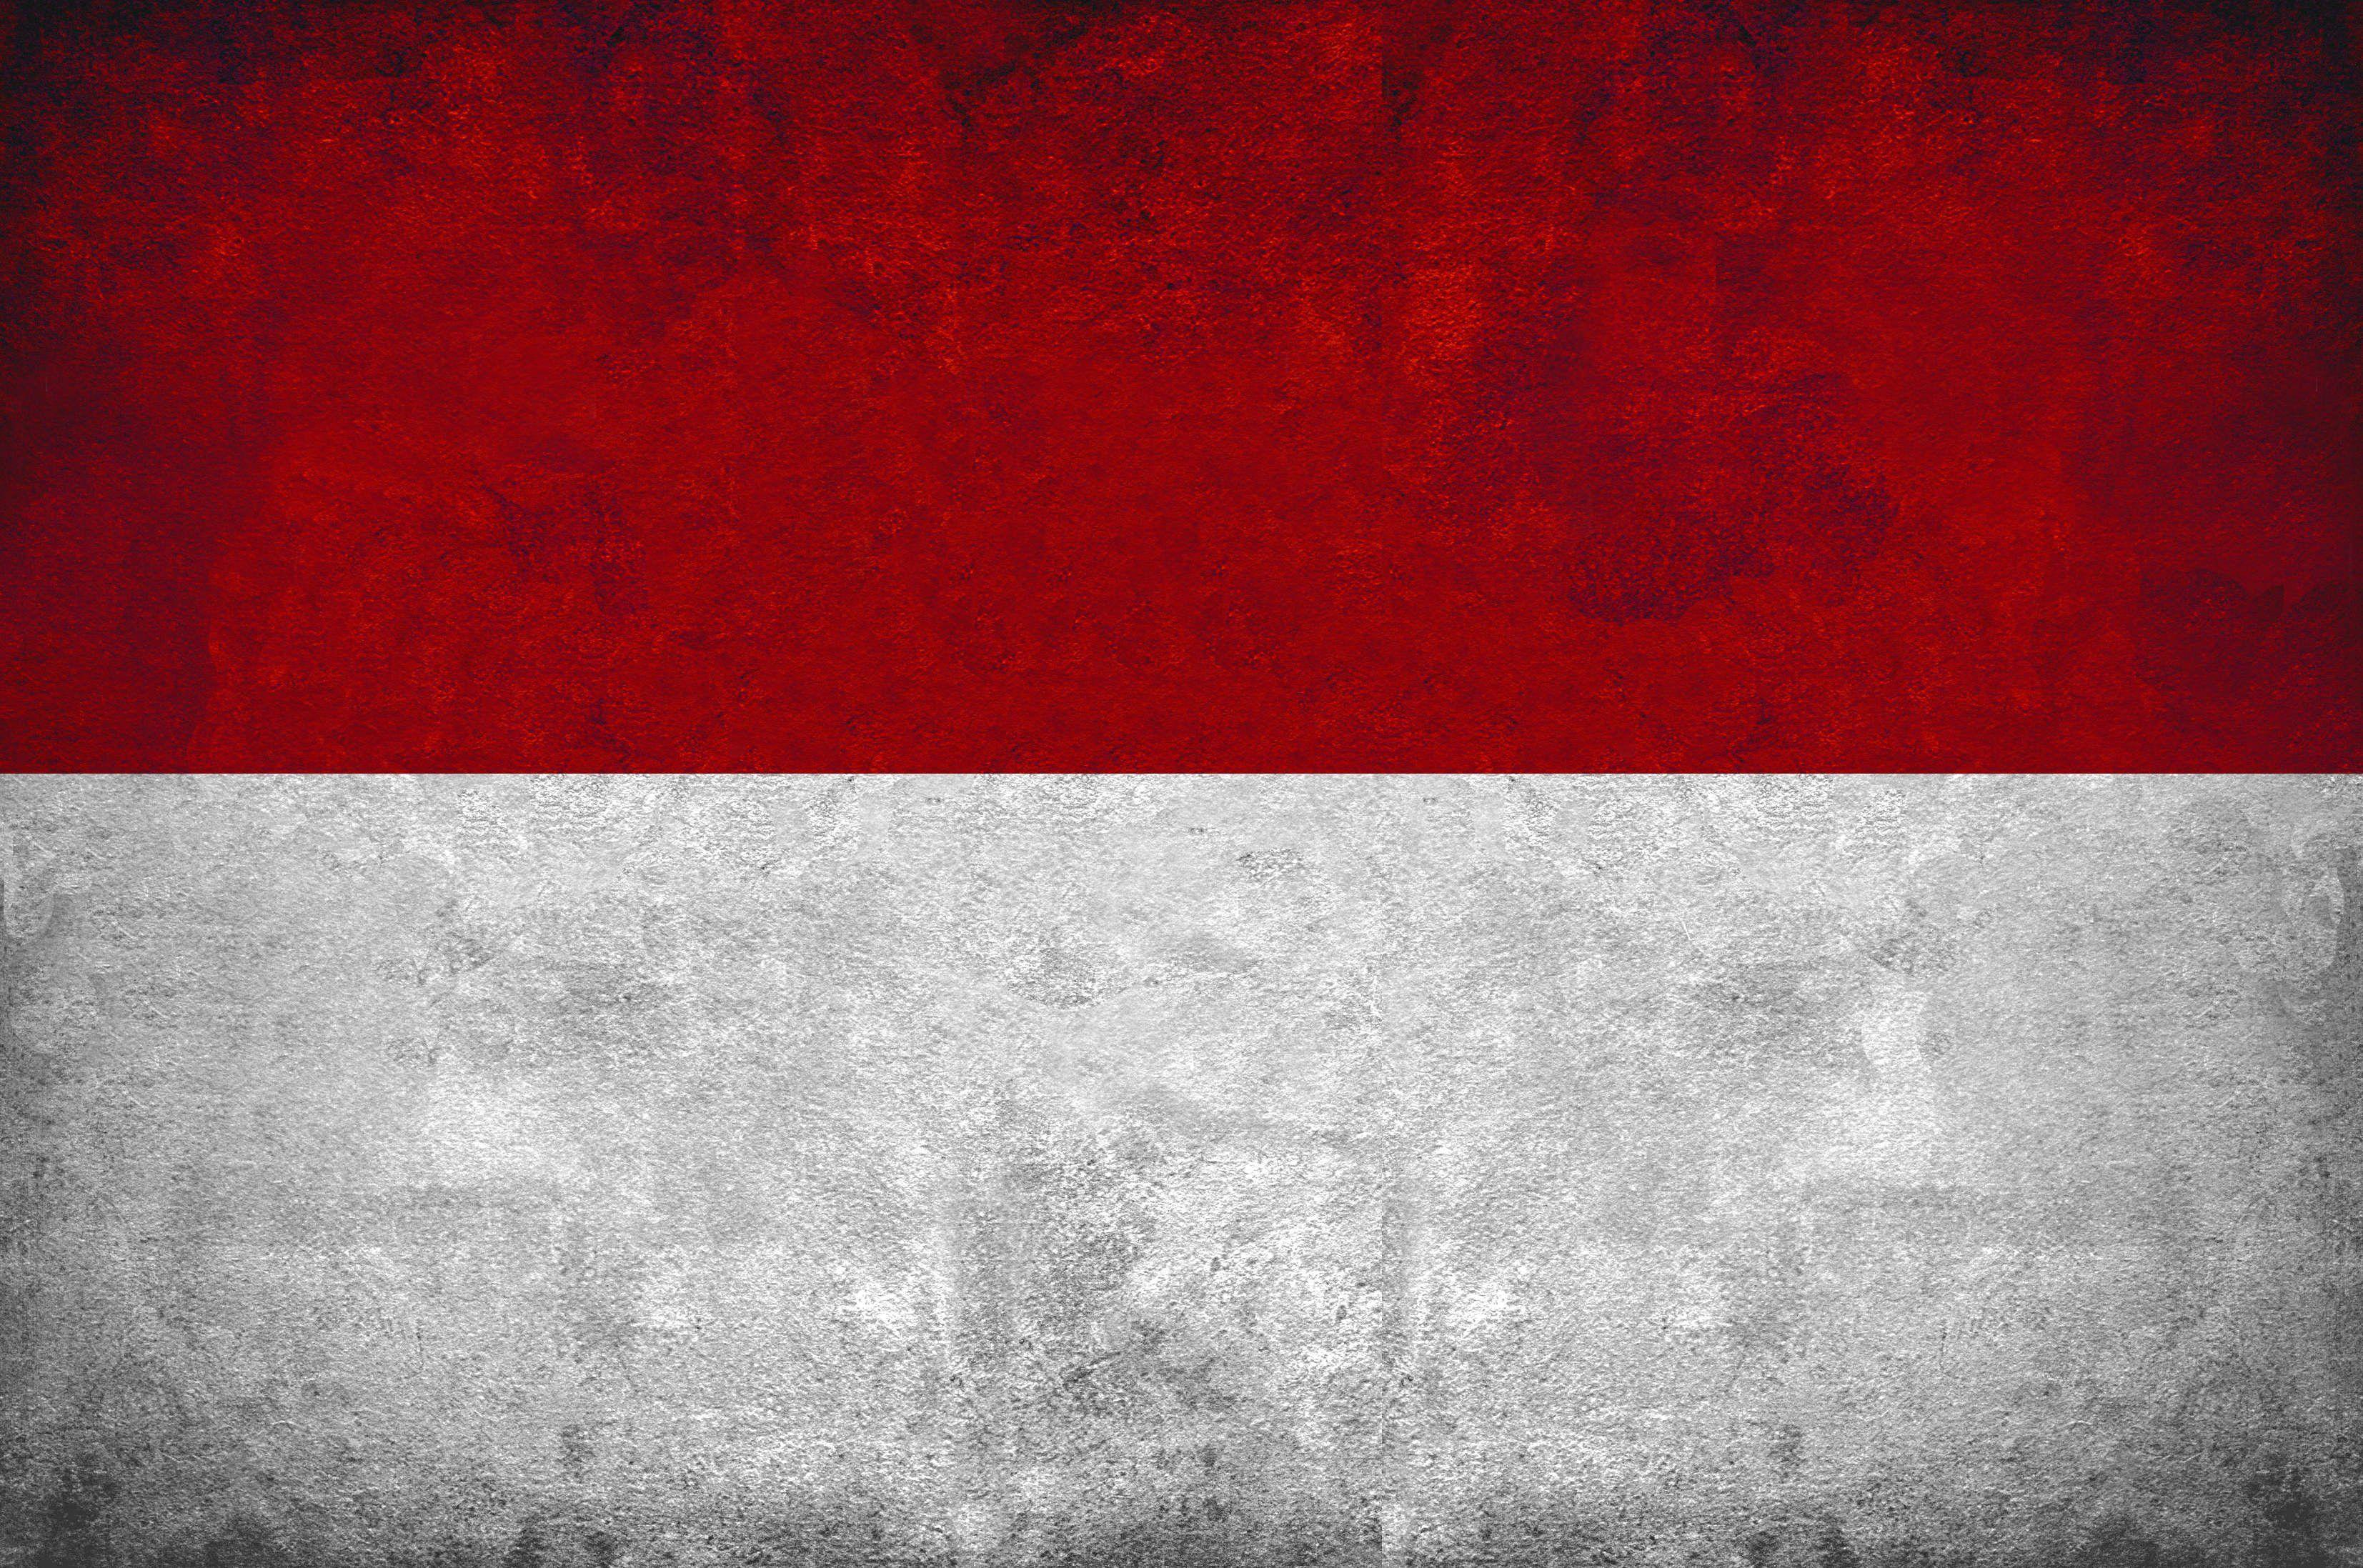 Indonesian Indonesia Flag